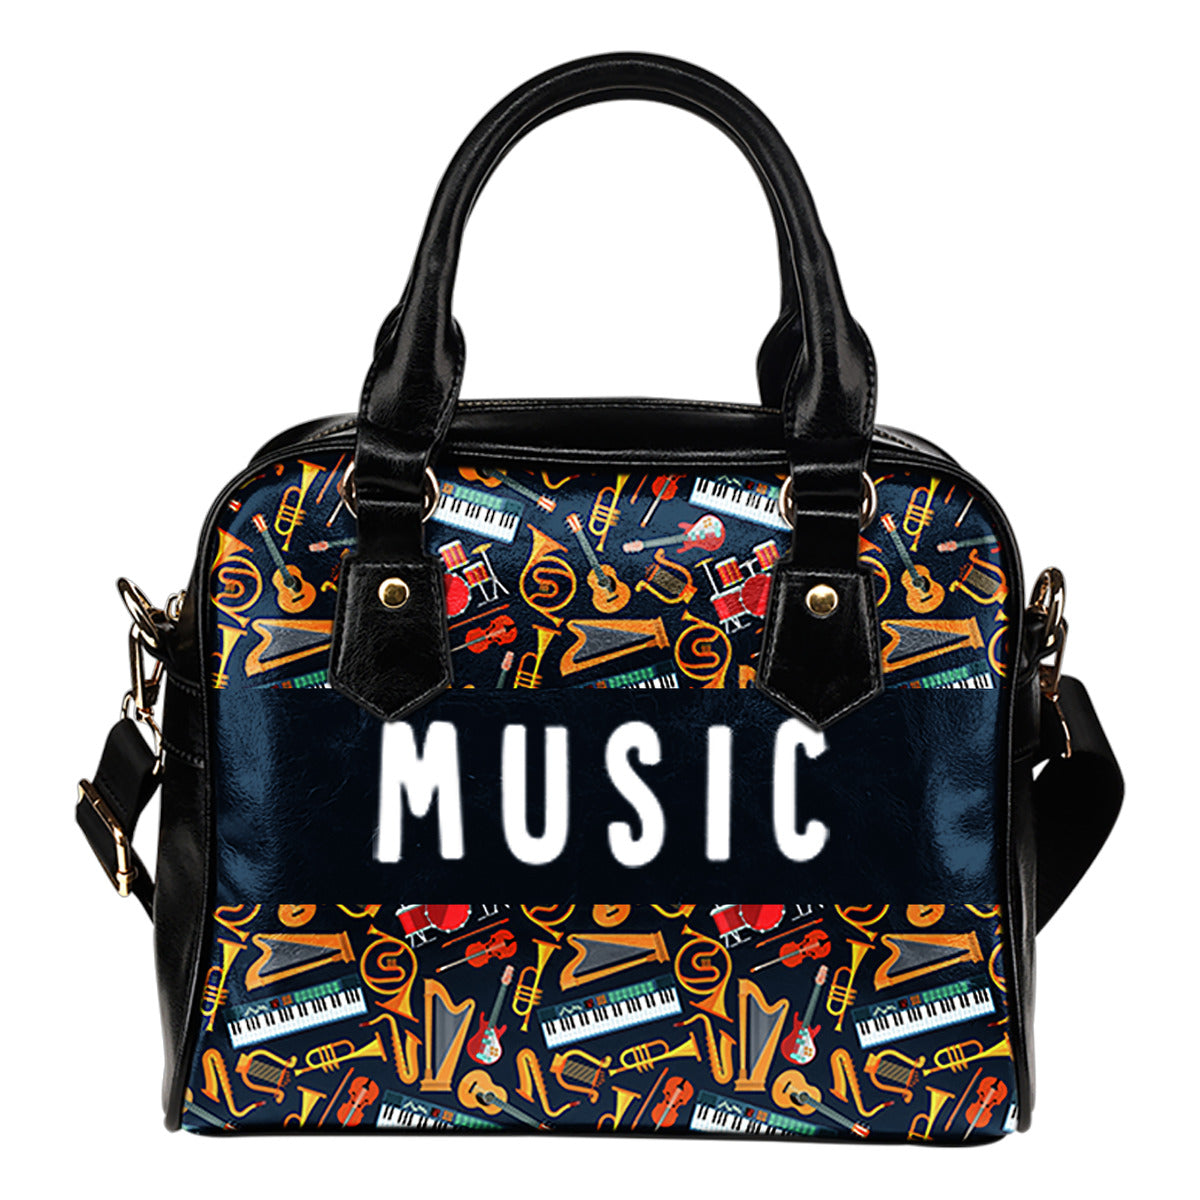 Music Teacher Handbag